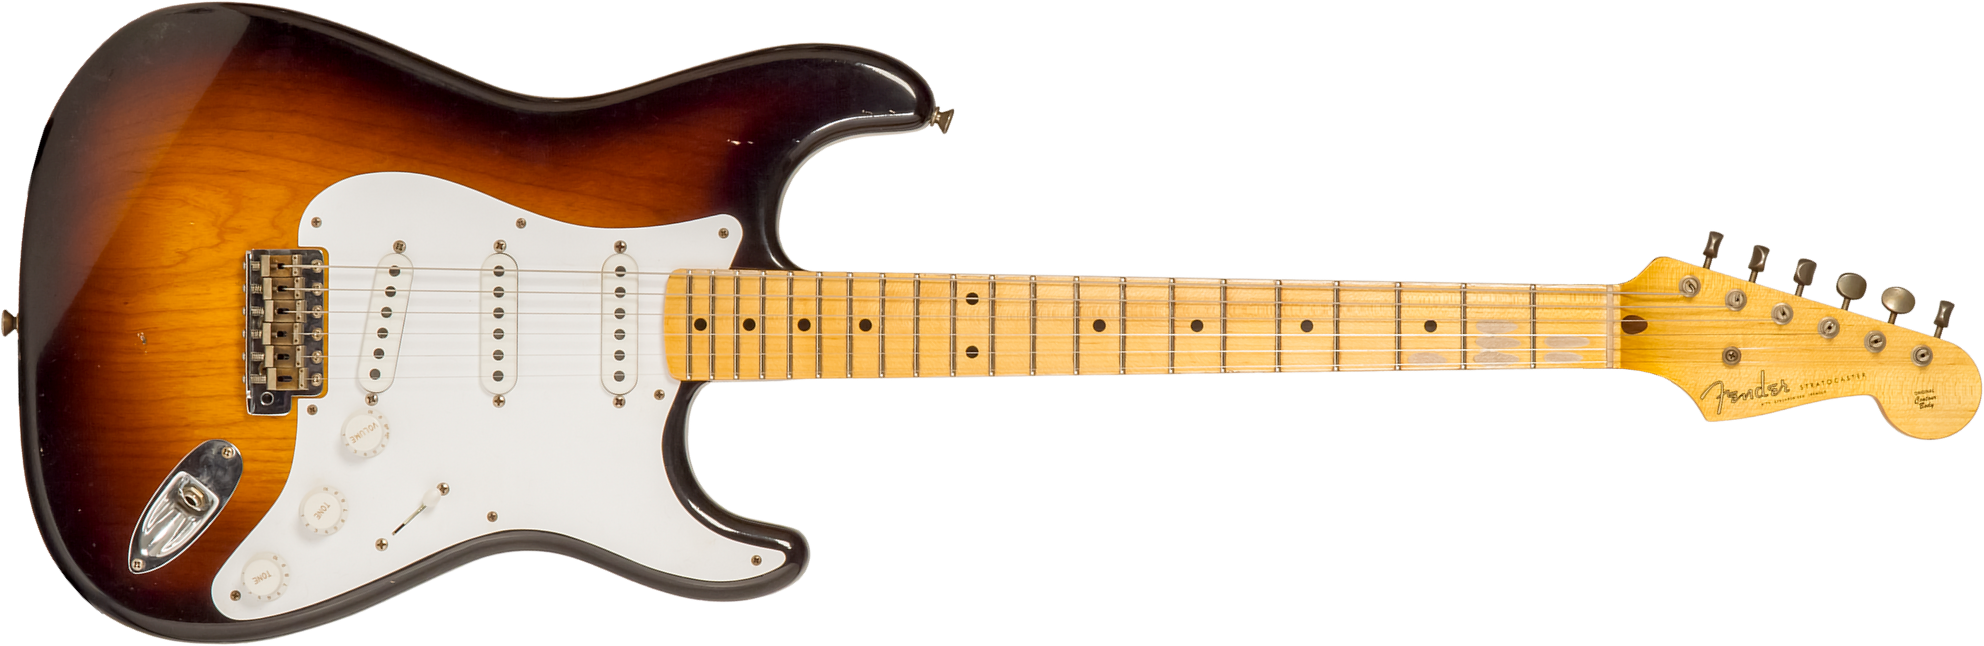 Fender Custom Shop Strat 1954 70th Anniv. 3s Trem Mn #xn4199 - Journeyman Relic Wide-fade 2-color Sunburst - Guitarra eléctrica con forma de str. - Ma